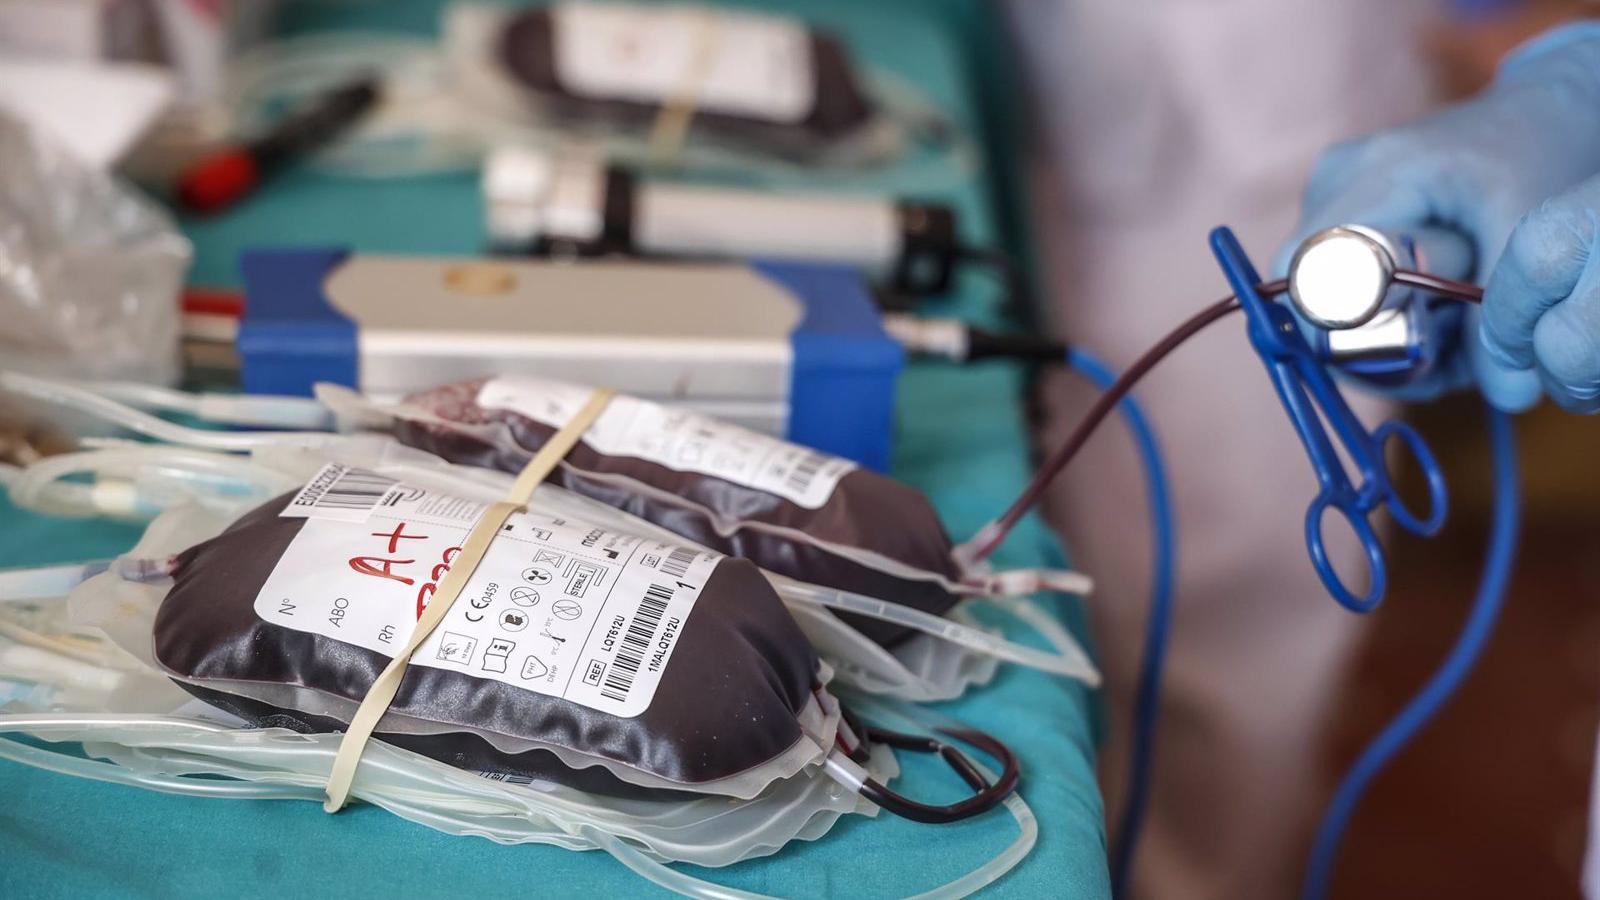 El Centro de Transfusión regala un roscón a los donantes de sangre este fin de semana